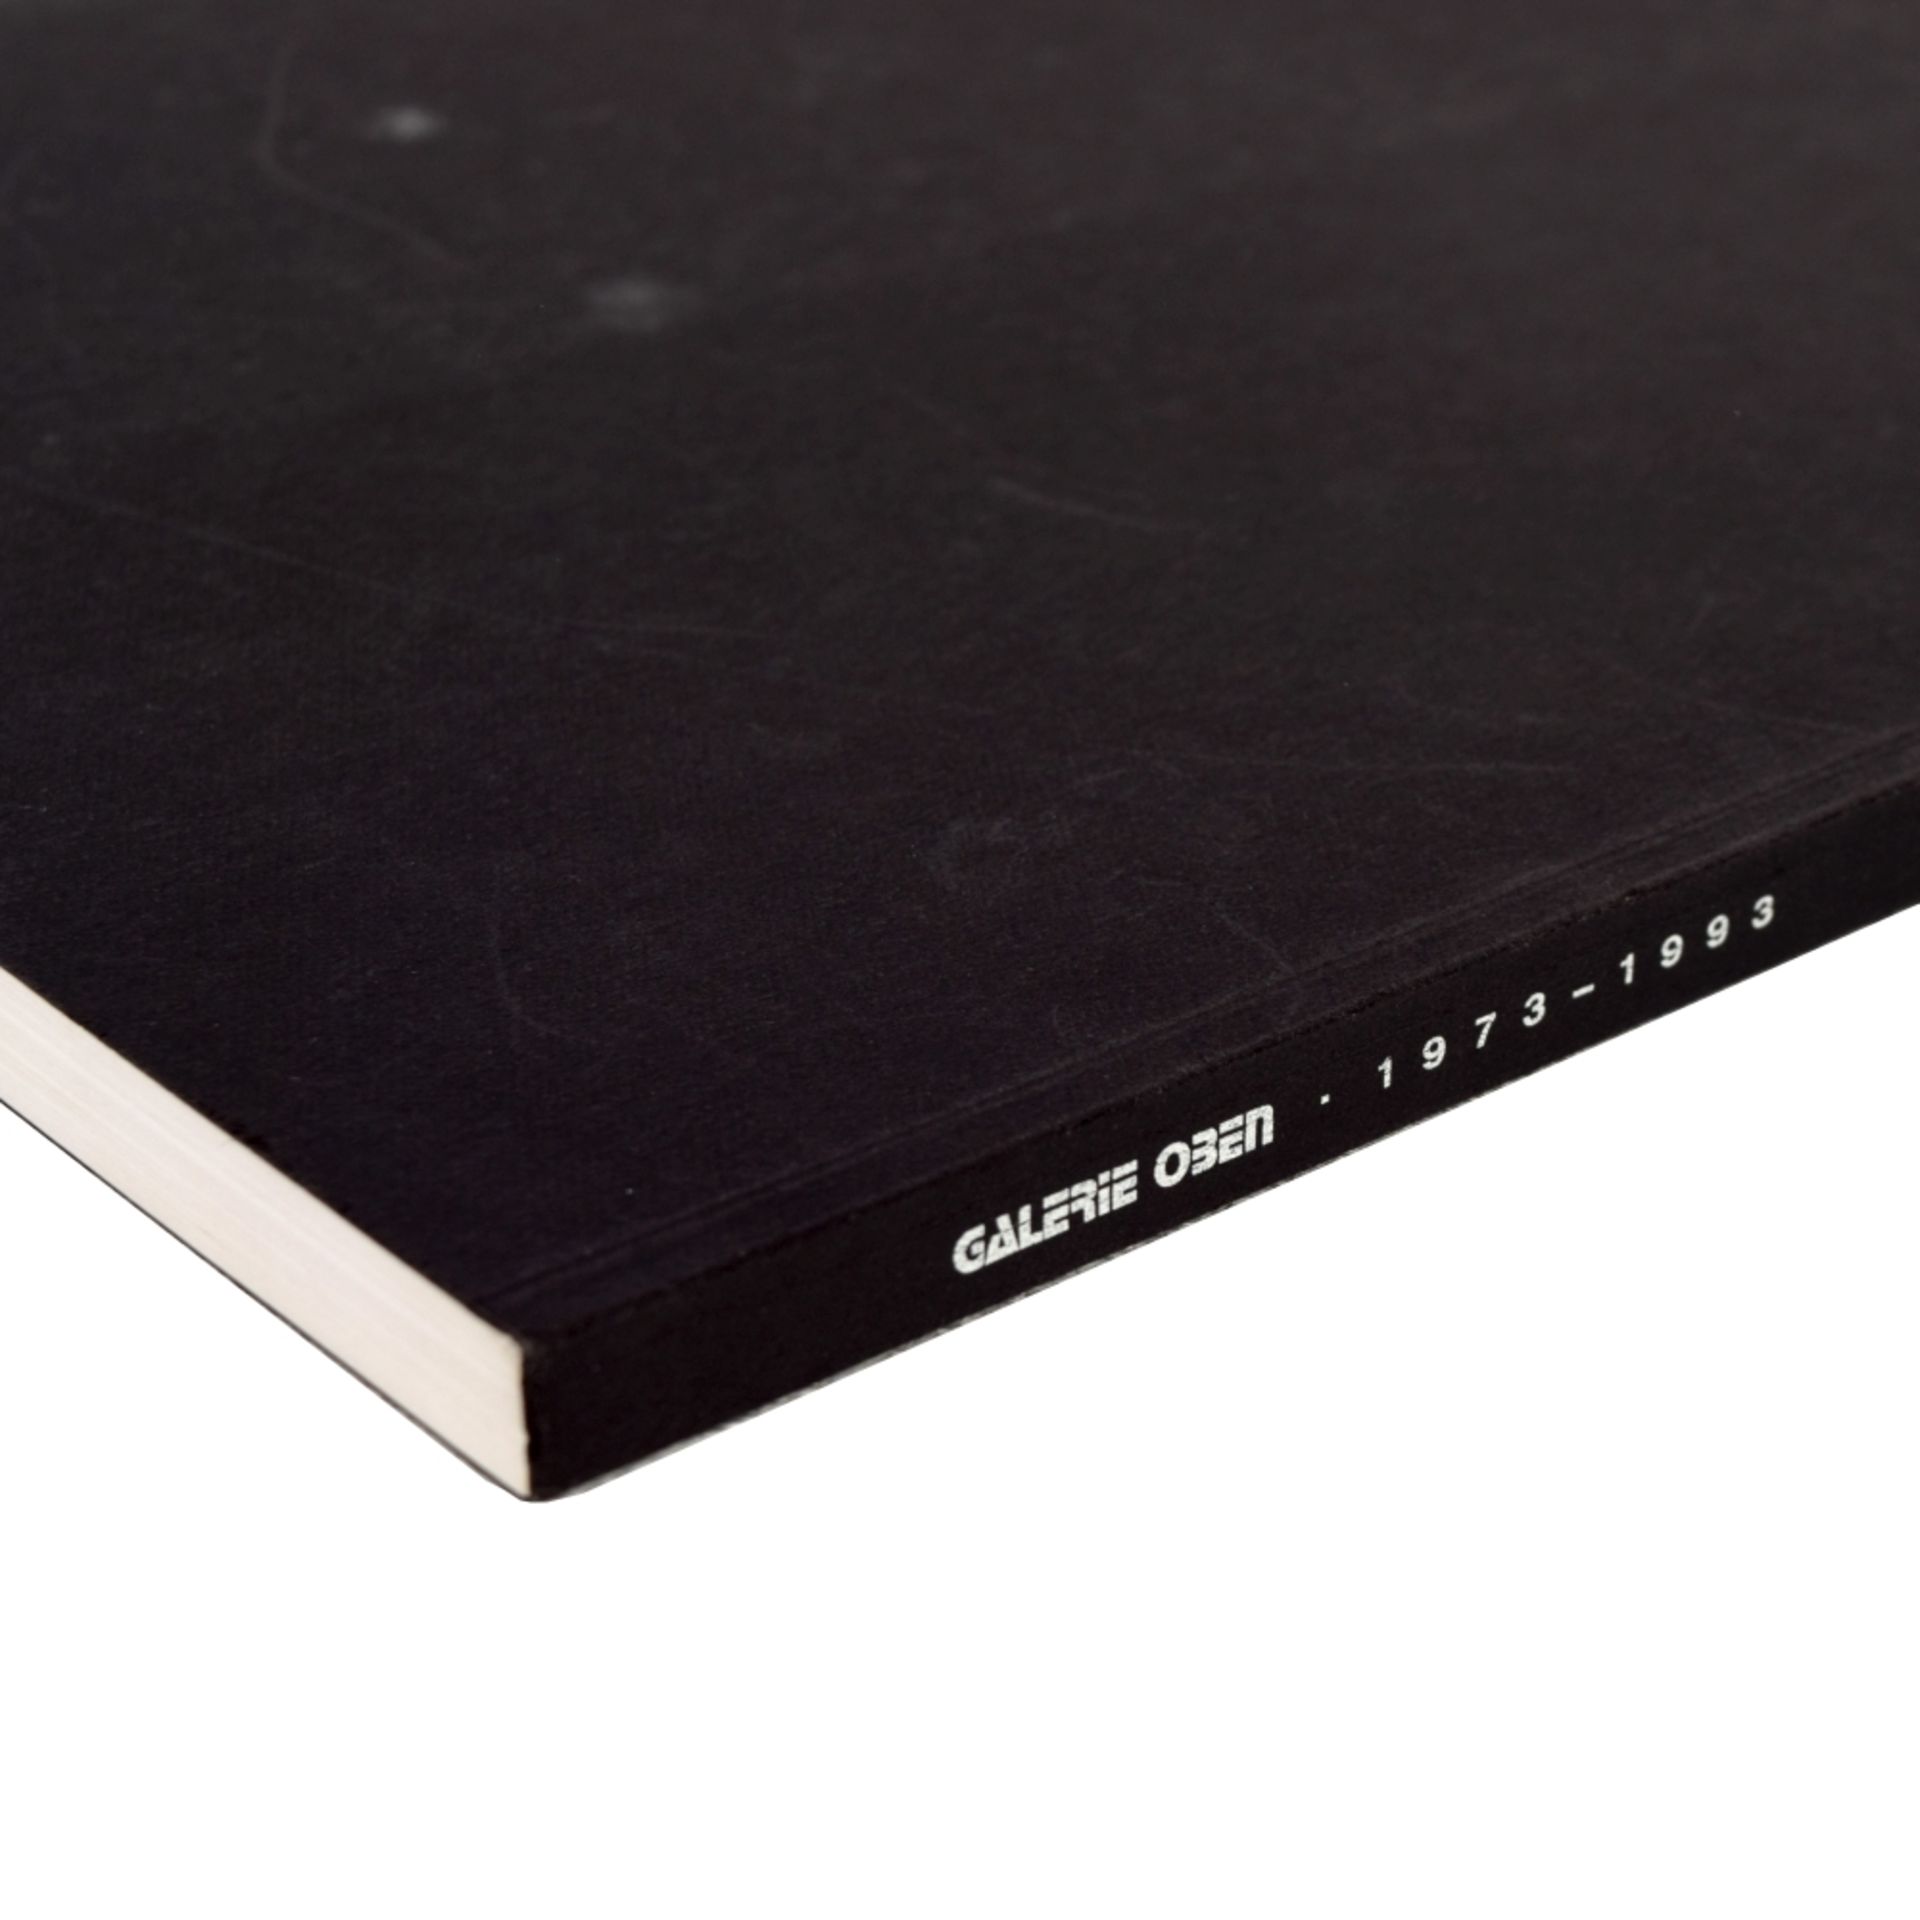 Katalog GALERIE OBEN 1973-1993